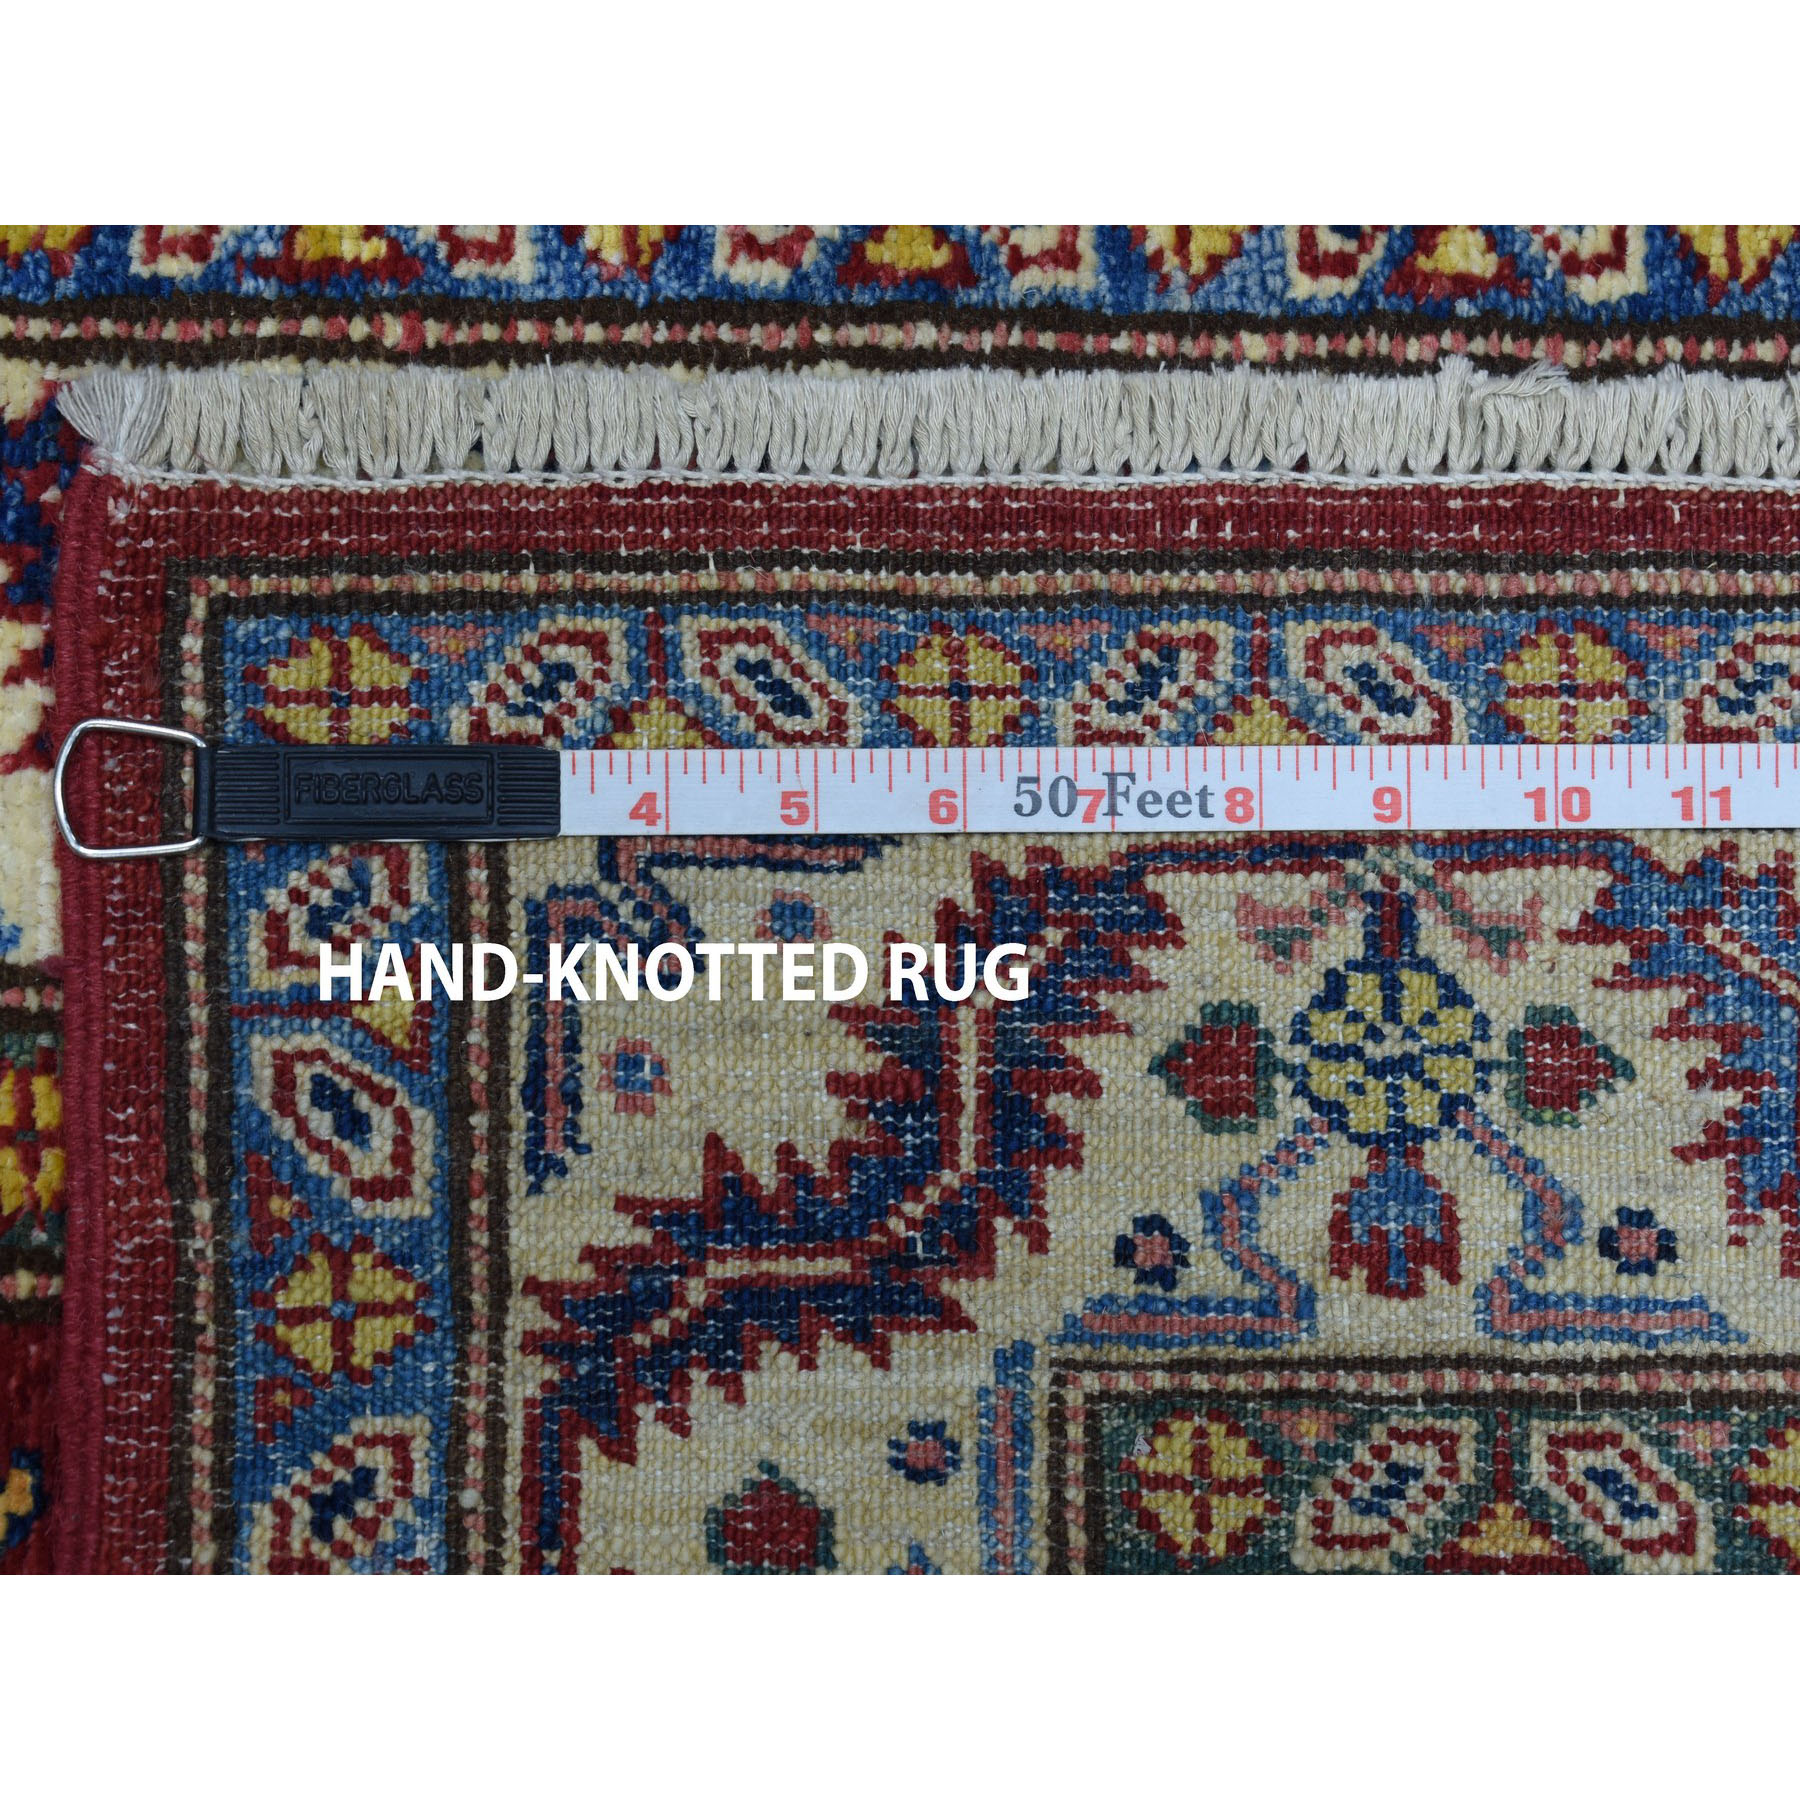 2-6 x19-8  Red Super Kazak Geometric Design XL Runner Pure Wool Hand-Knotted Oriental Rug 